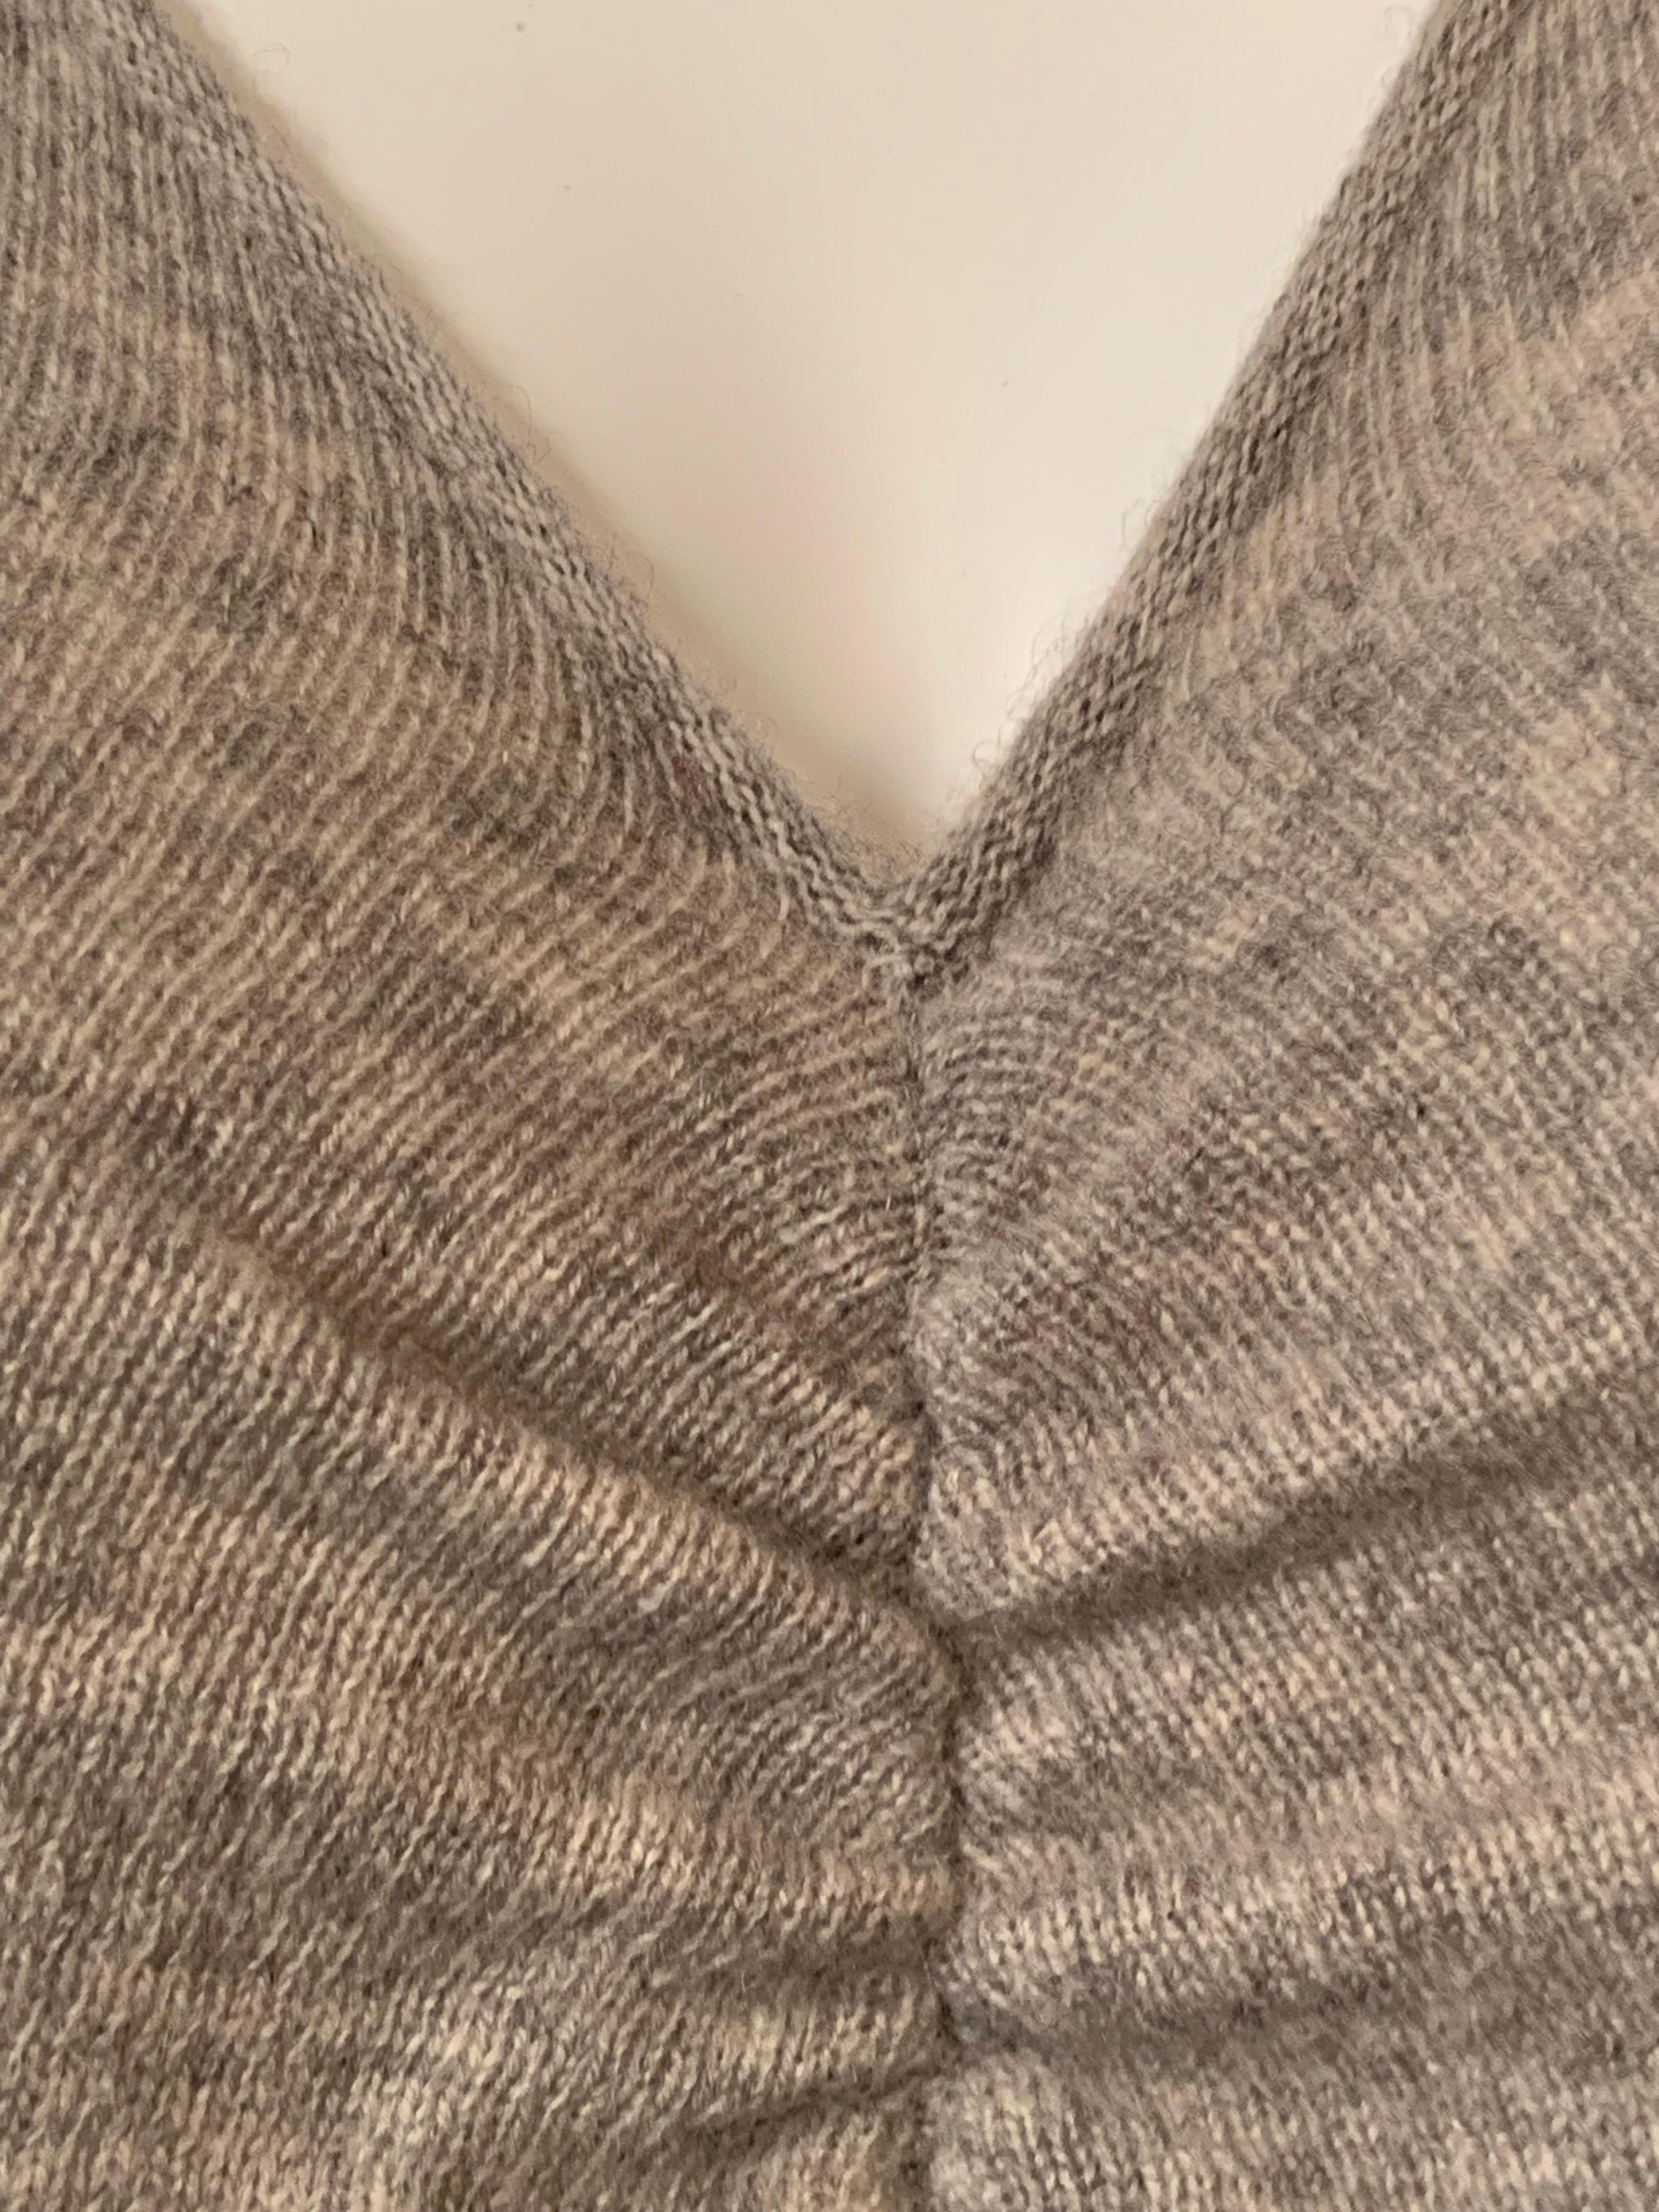 Women's Giorgio Armani Heather Grey Cashmere Sweater  Never Worn For Sale